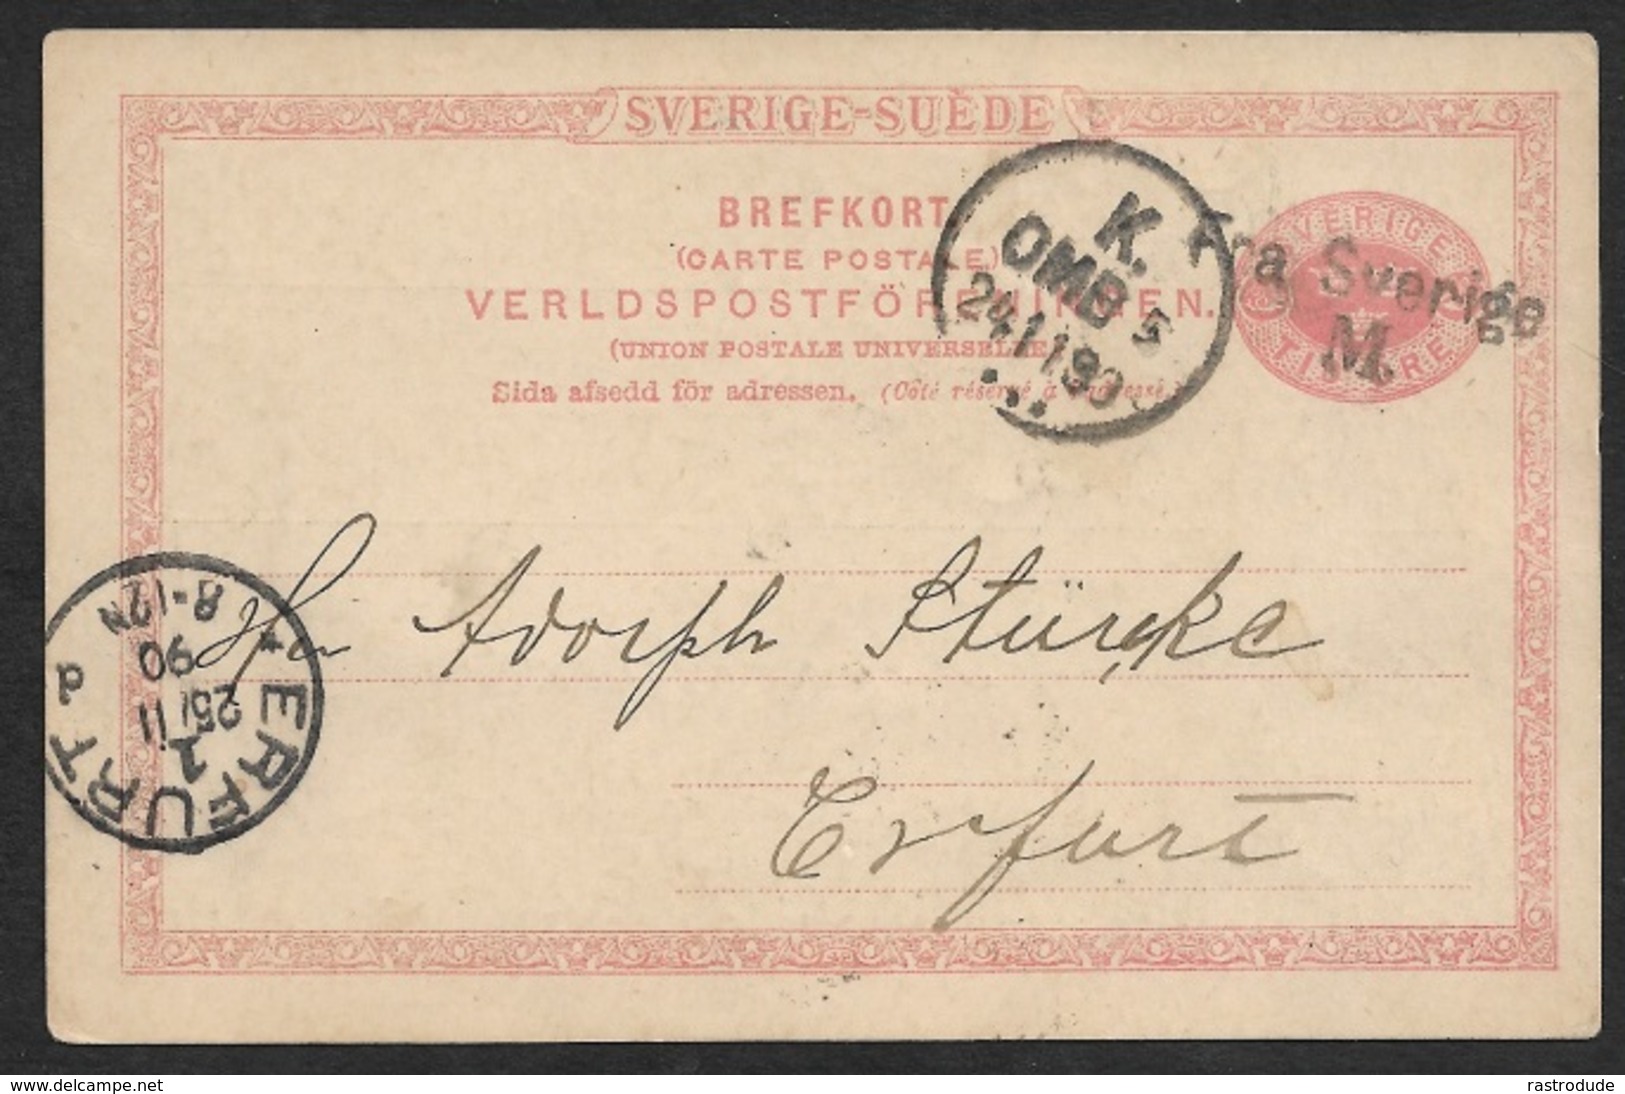 1890 - SWEDEN SEEPOST - Stationery Card Mi. P20 FRA SVERIGE M - MALMÖ To ERFURT - Storia Postale